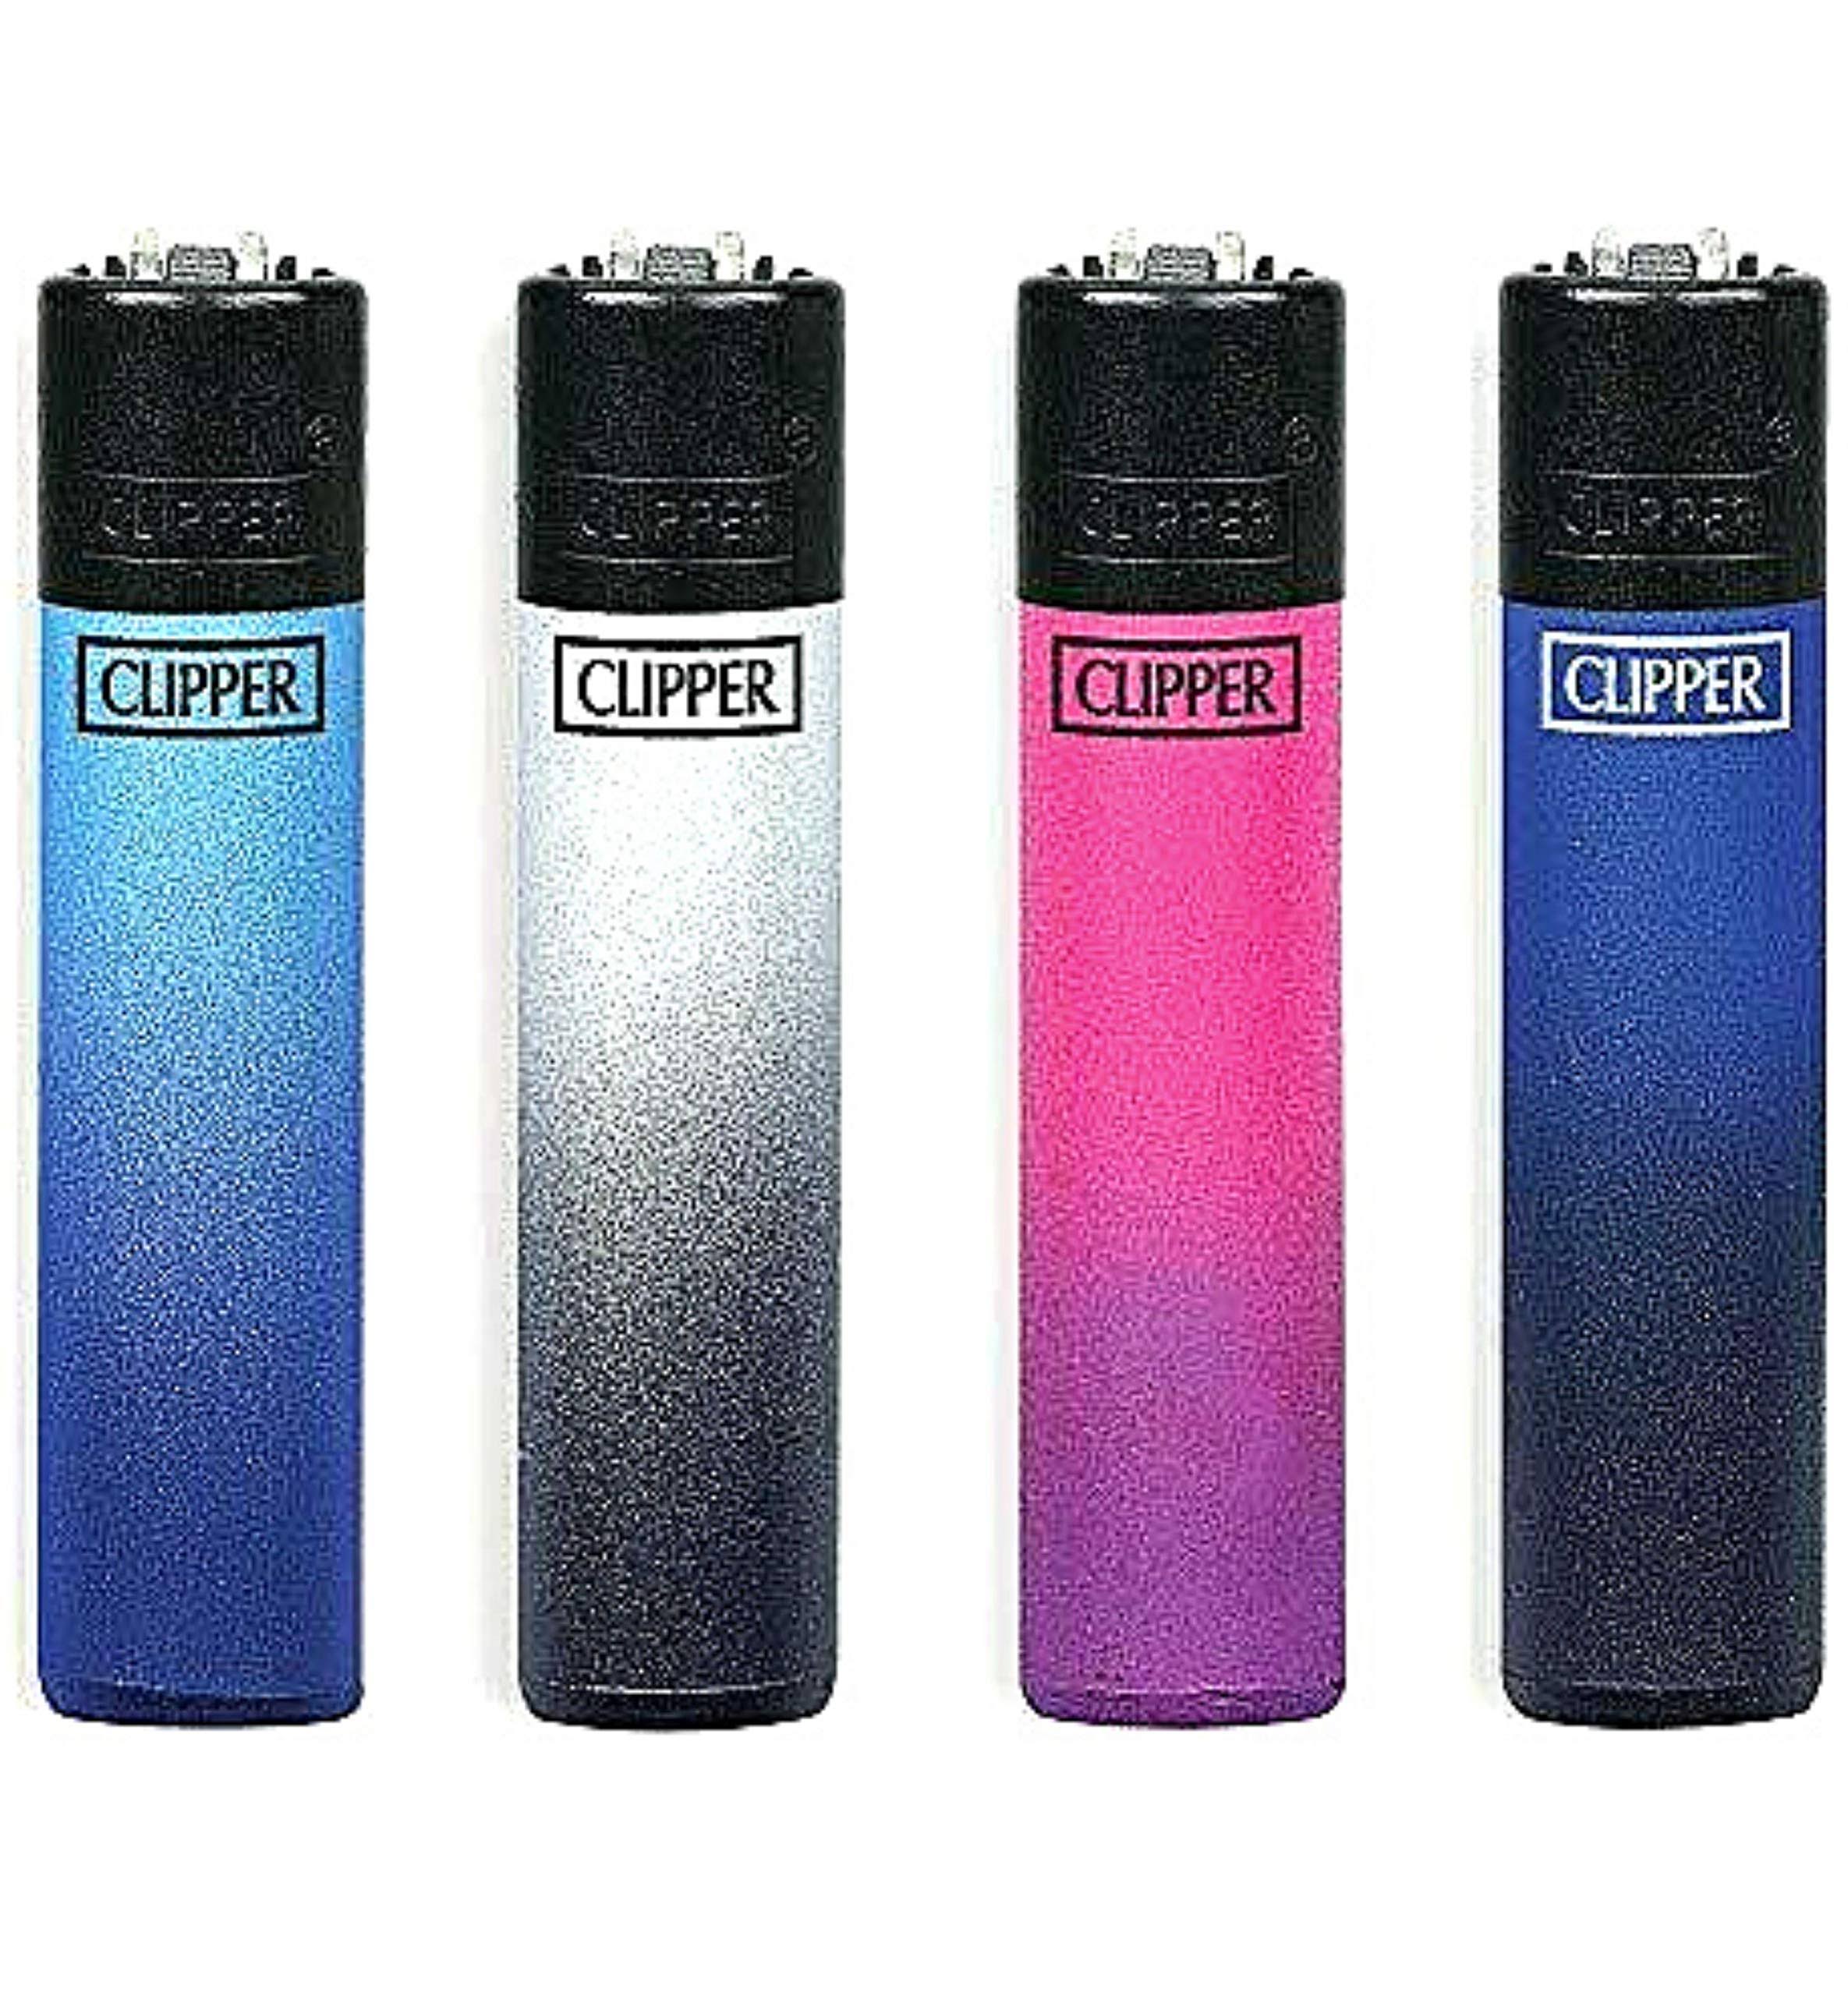 Clipper Flint Lighters in Solid Metallic Colors - 4 Lighters in 4 Metallic Colors